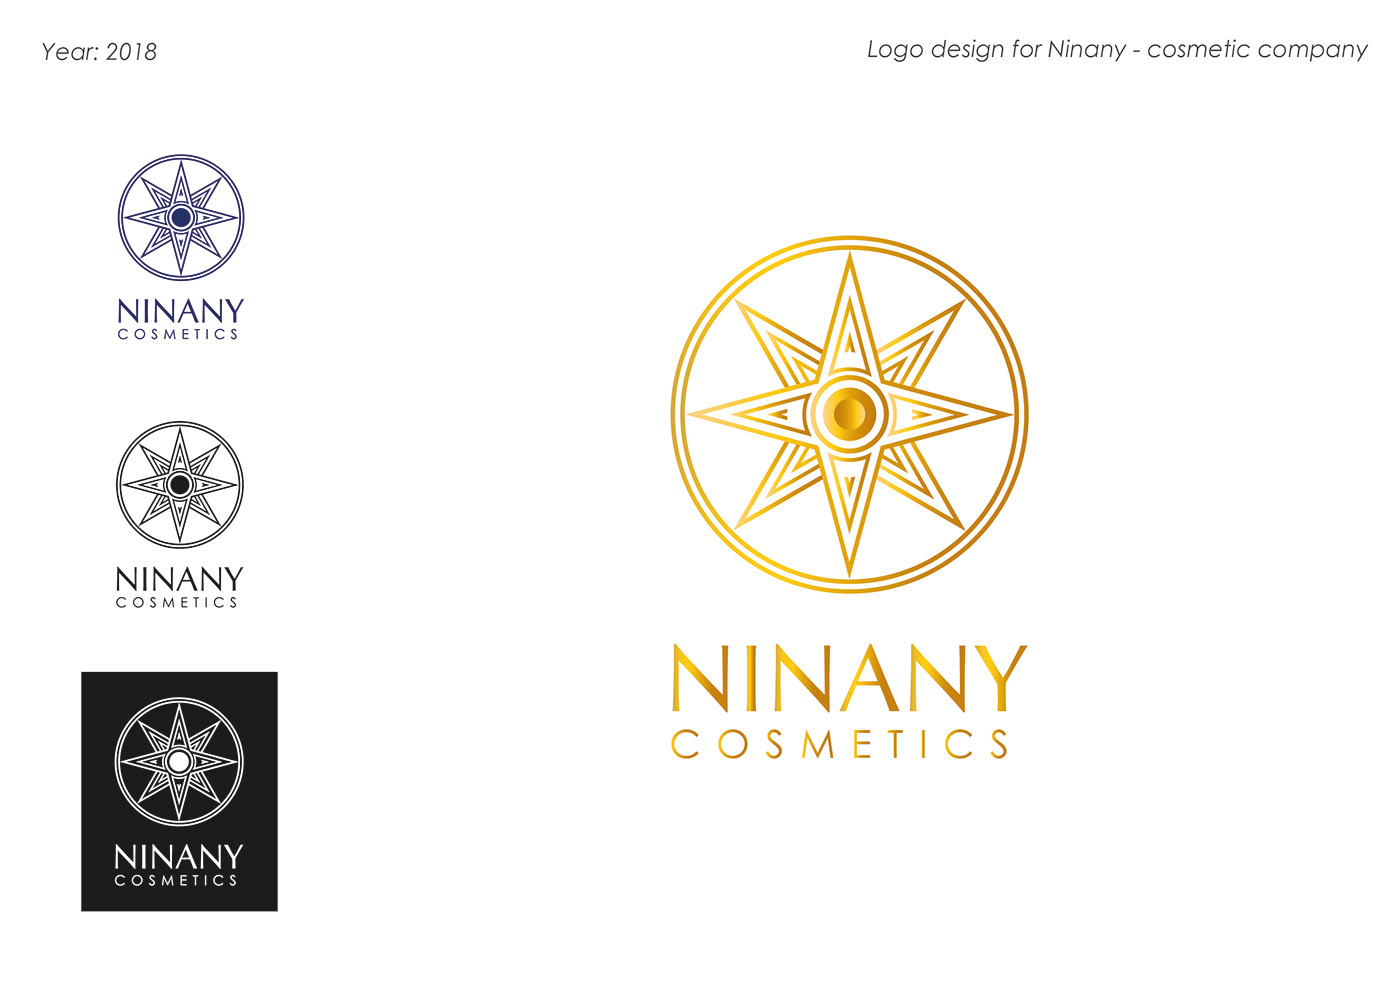 #graphicDesign #Logos #brandidentity #logofolio